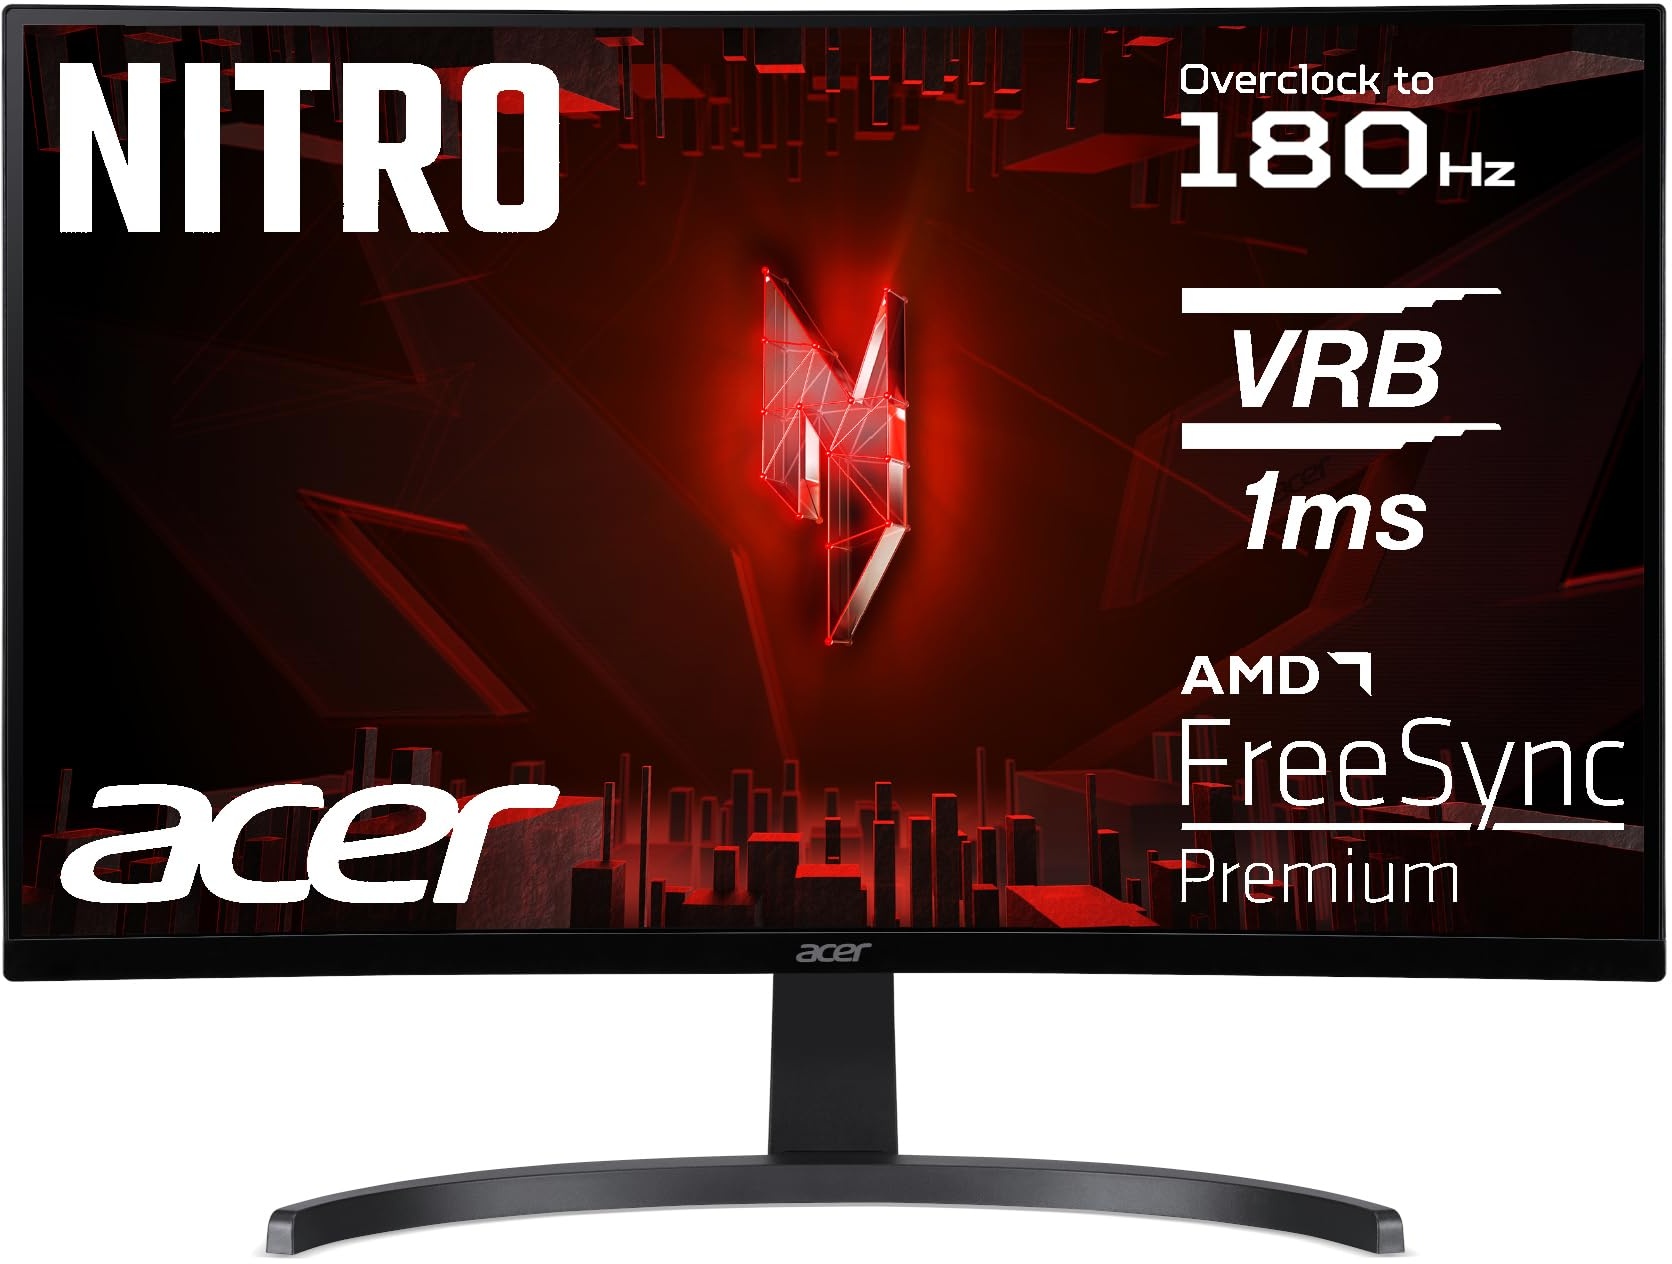 Acer Nitro ED273 S3 Gaming Monitor 27 Zoll (69 cm Bildschirm) Full HD, 165 Hz (180Hz OC), 1ms(VRB), 1x HDMI 2.0, 1x HDMI 1.4, 1xDP 1.2, AMD FreeSync Premium, schwarz